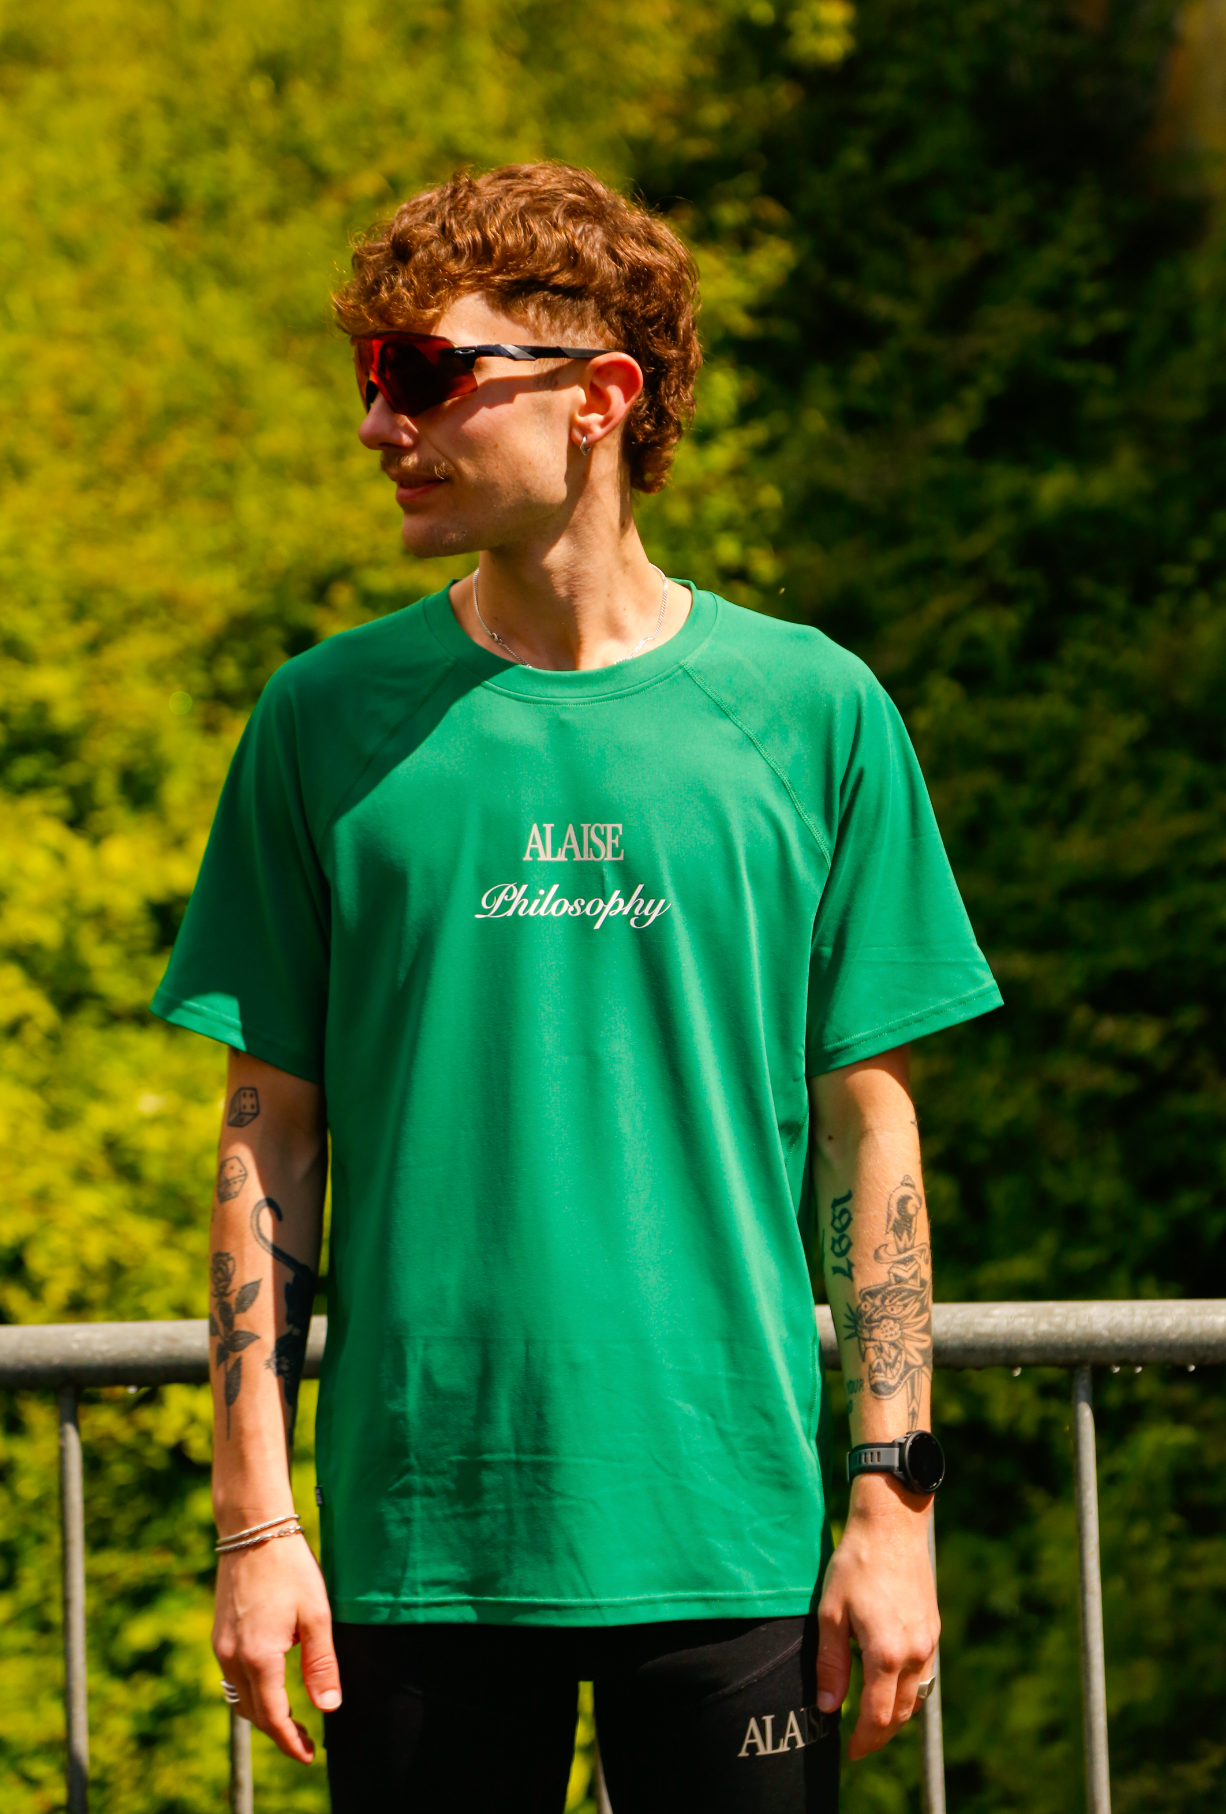 Alaise Active Philosophy T-Shirt - Green